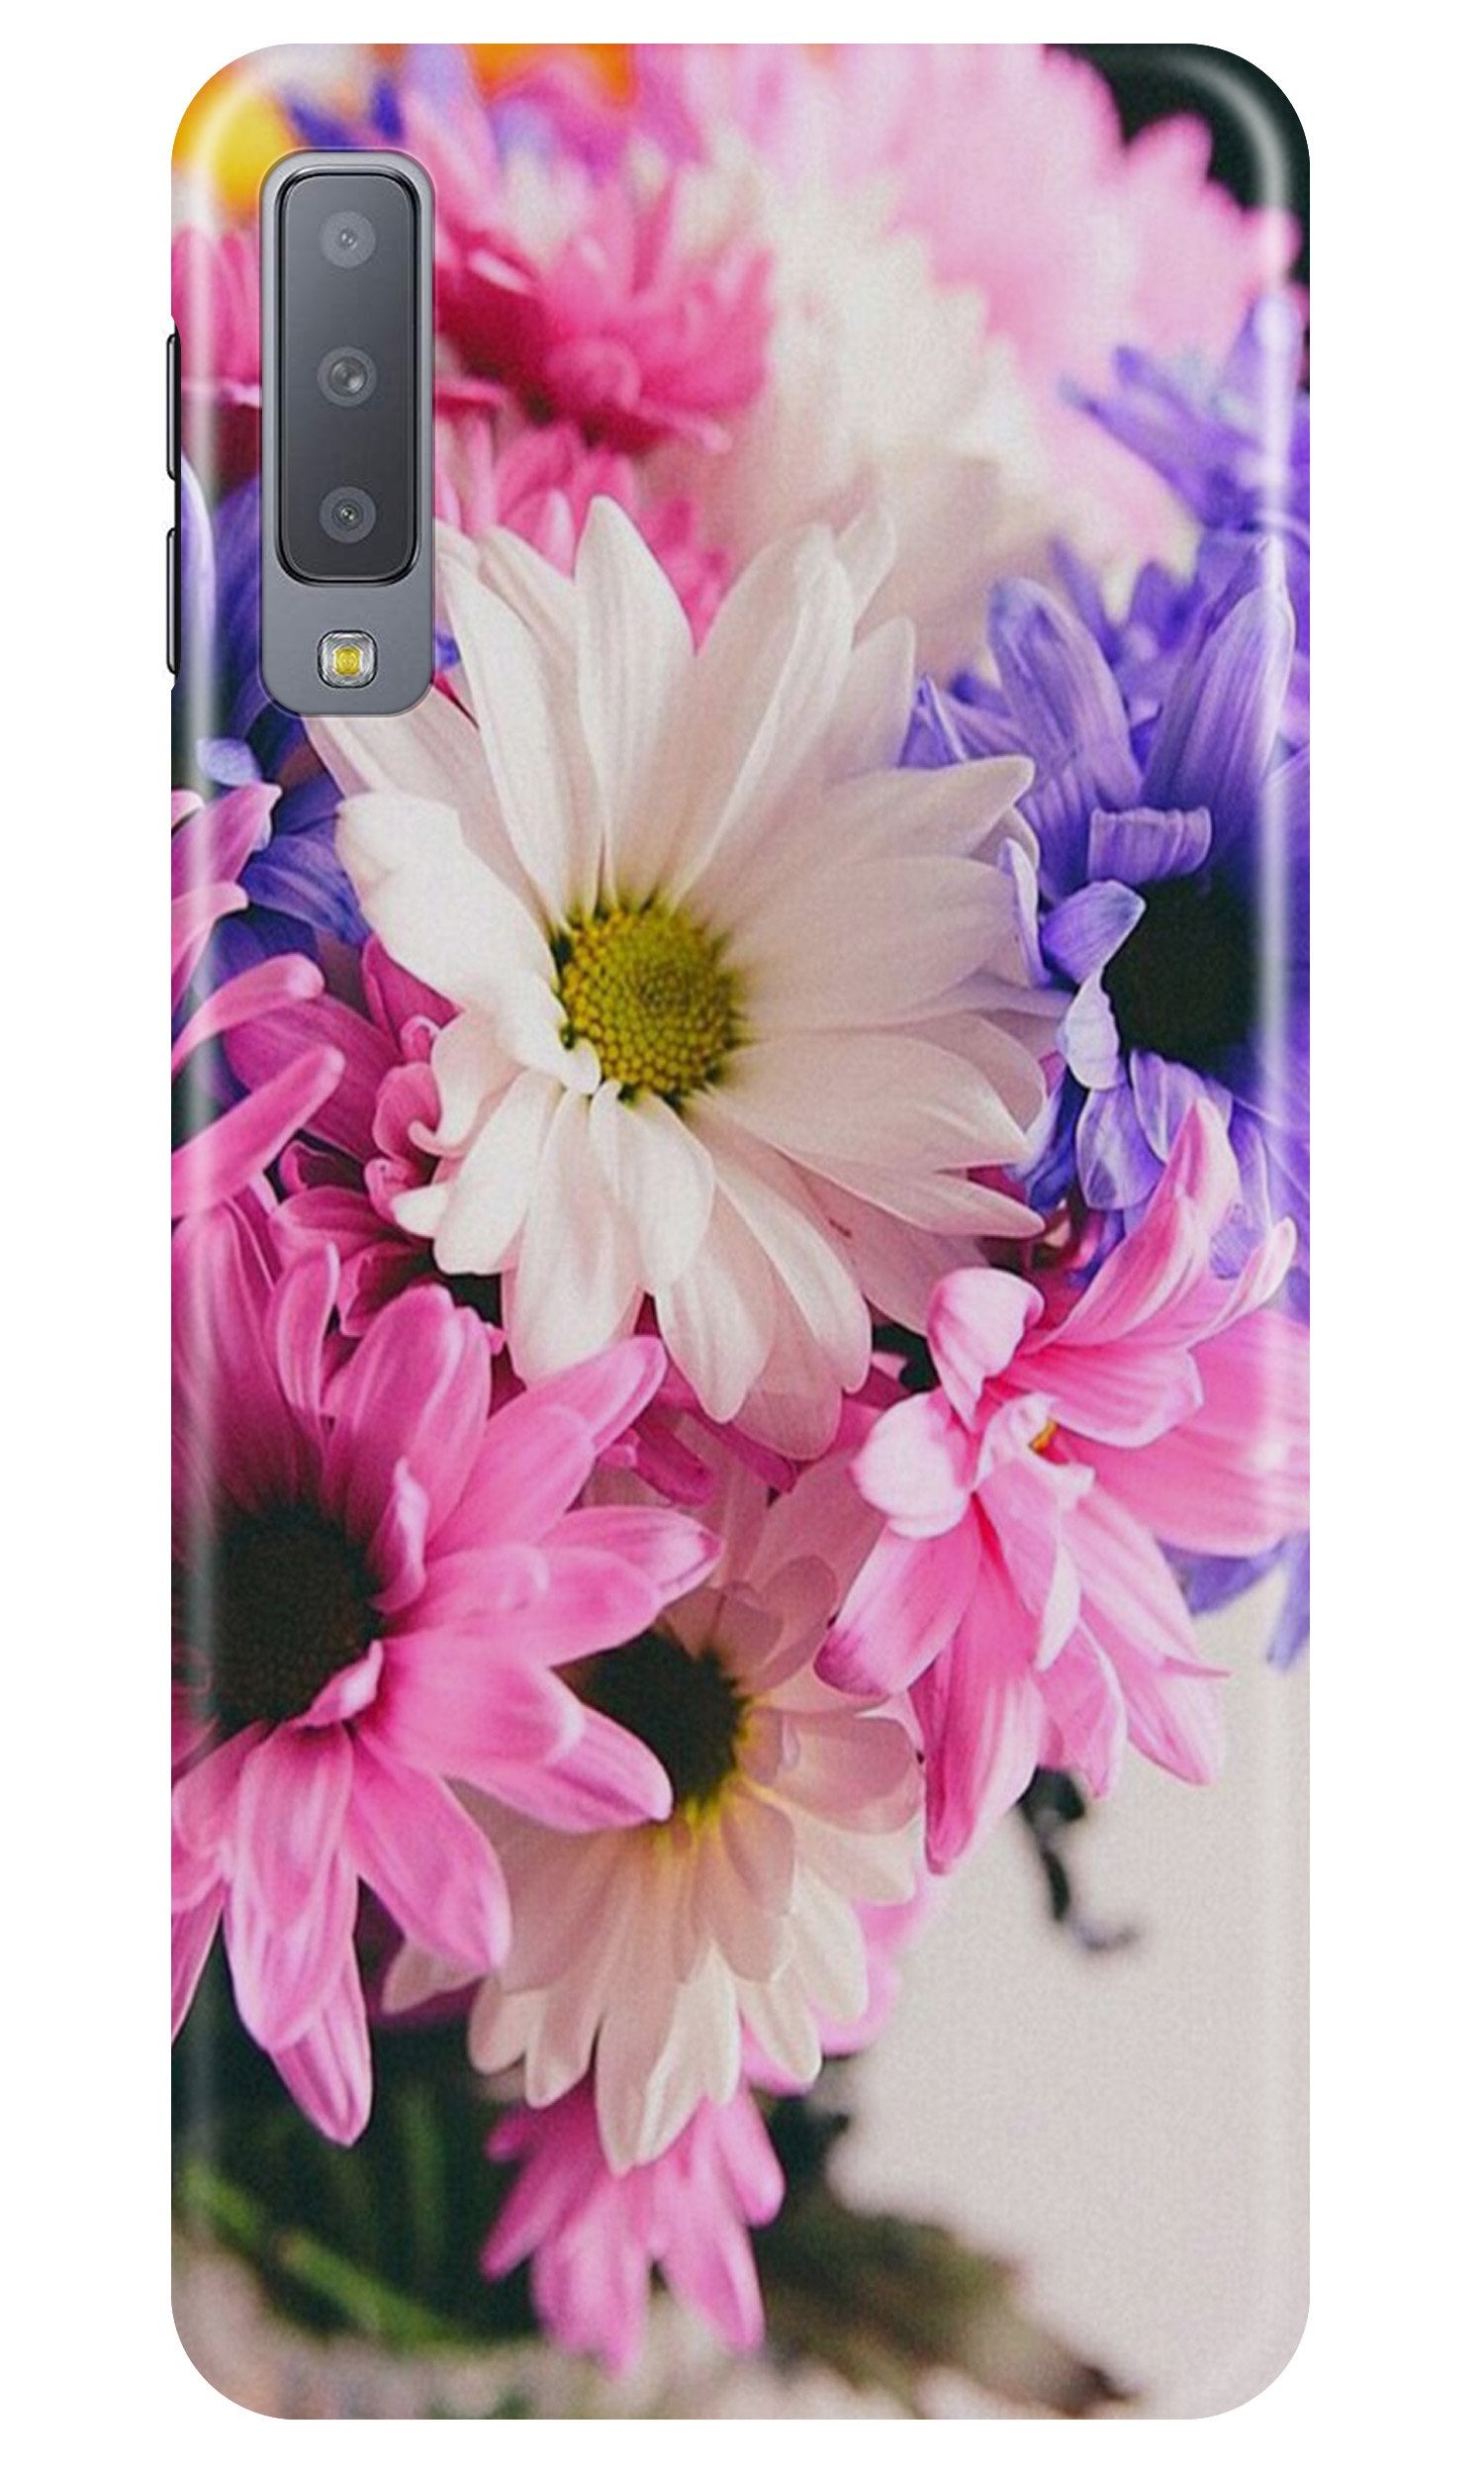 Coloful Daisy Case for Samsung Galaxy A50s